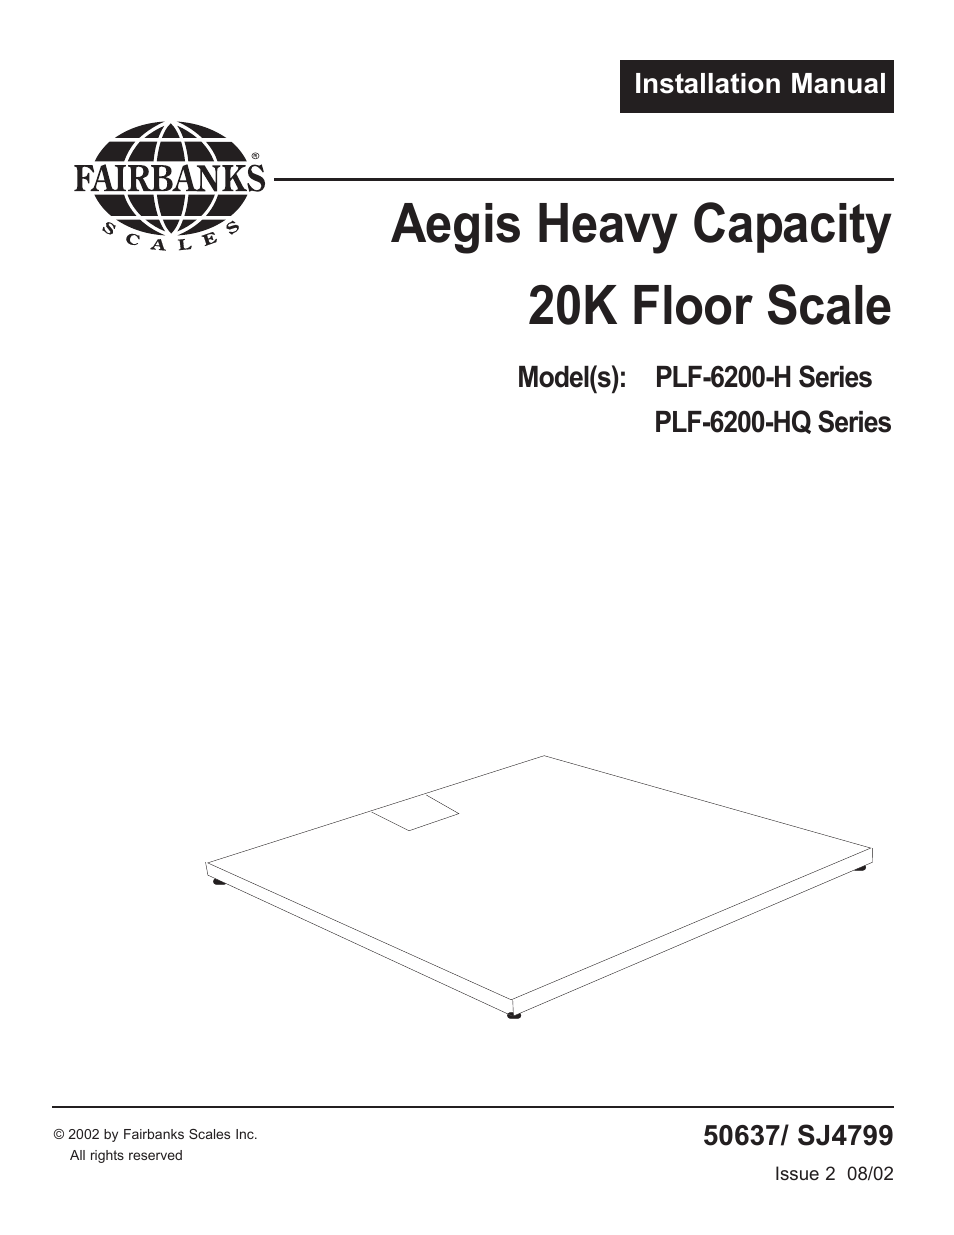 Aegis Heavy Capacity PLF-6200-H Series